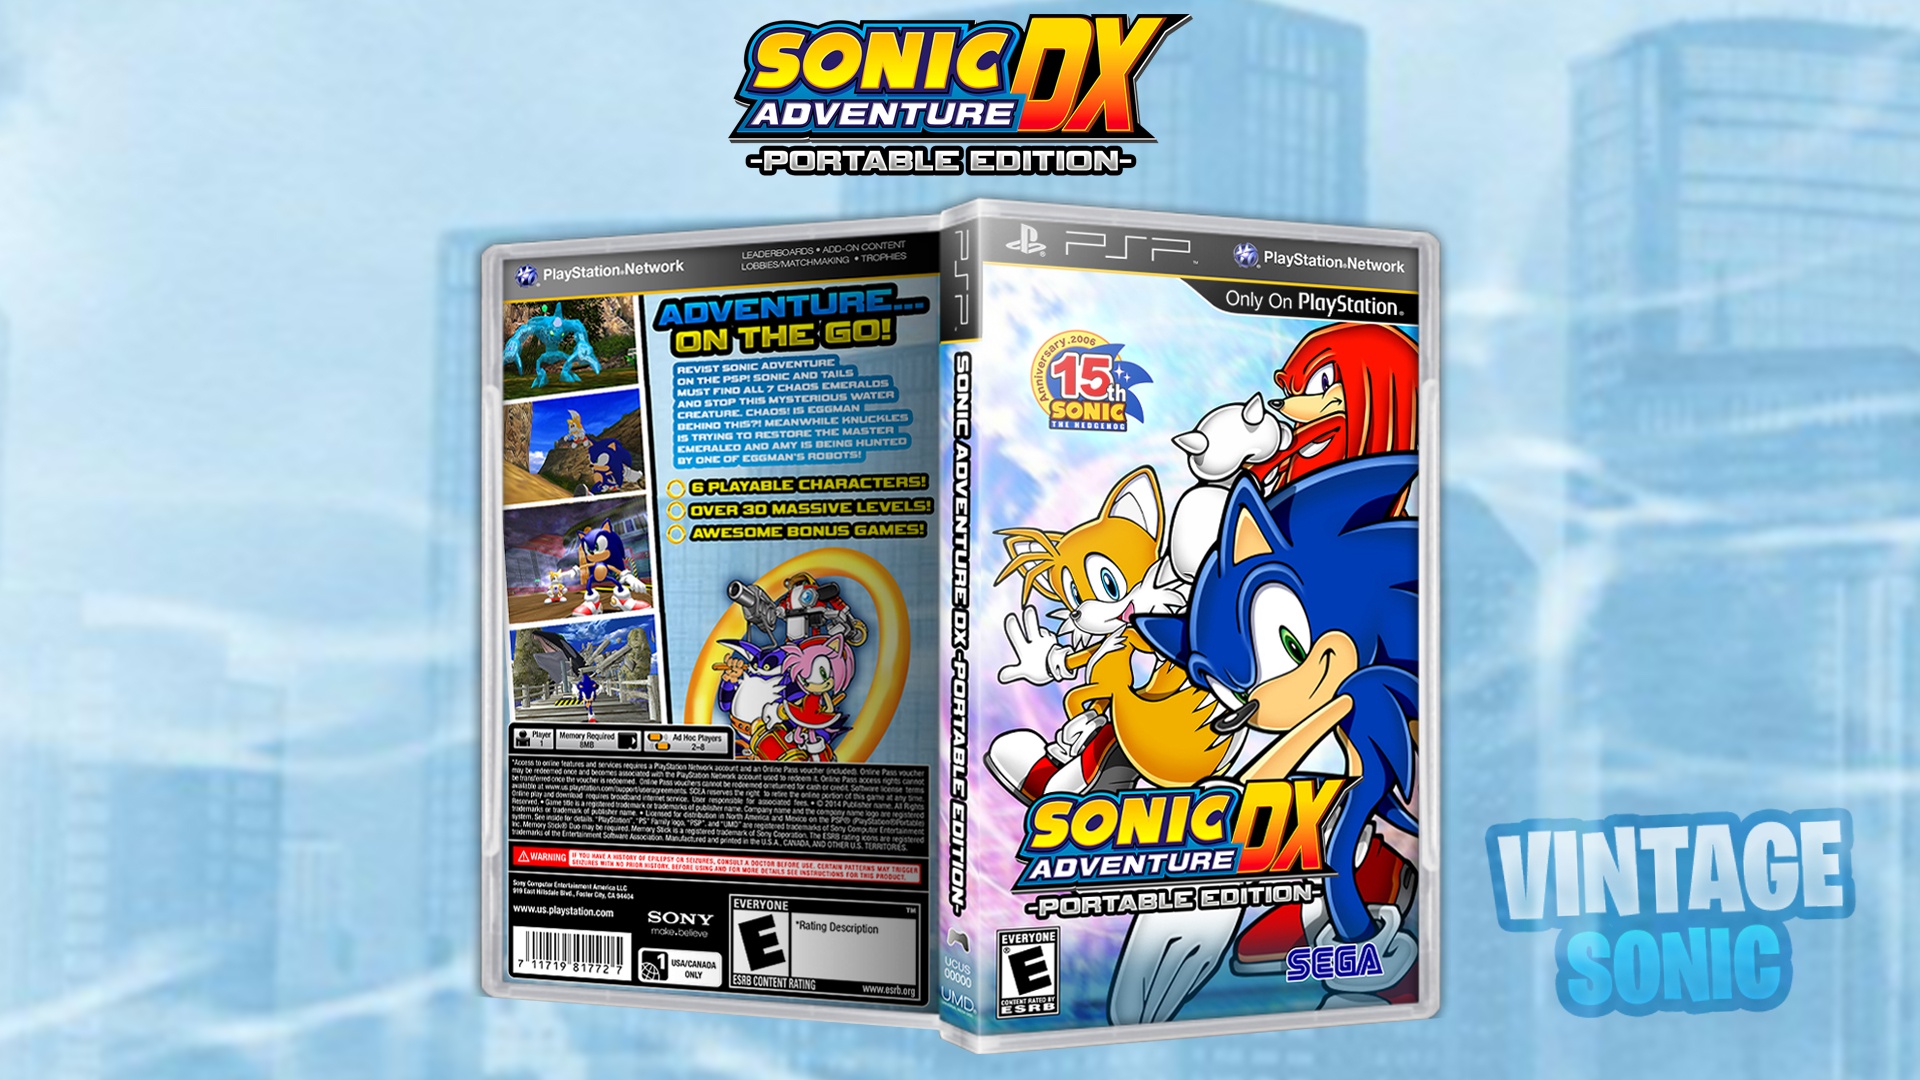 Sonic Adventure DX Portable Edition box cover